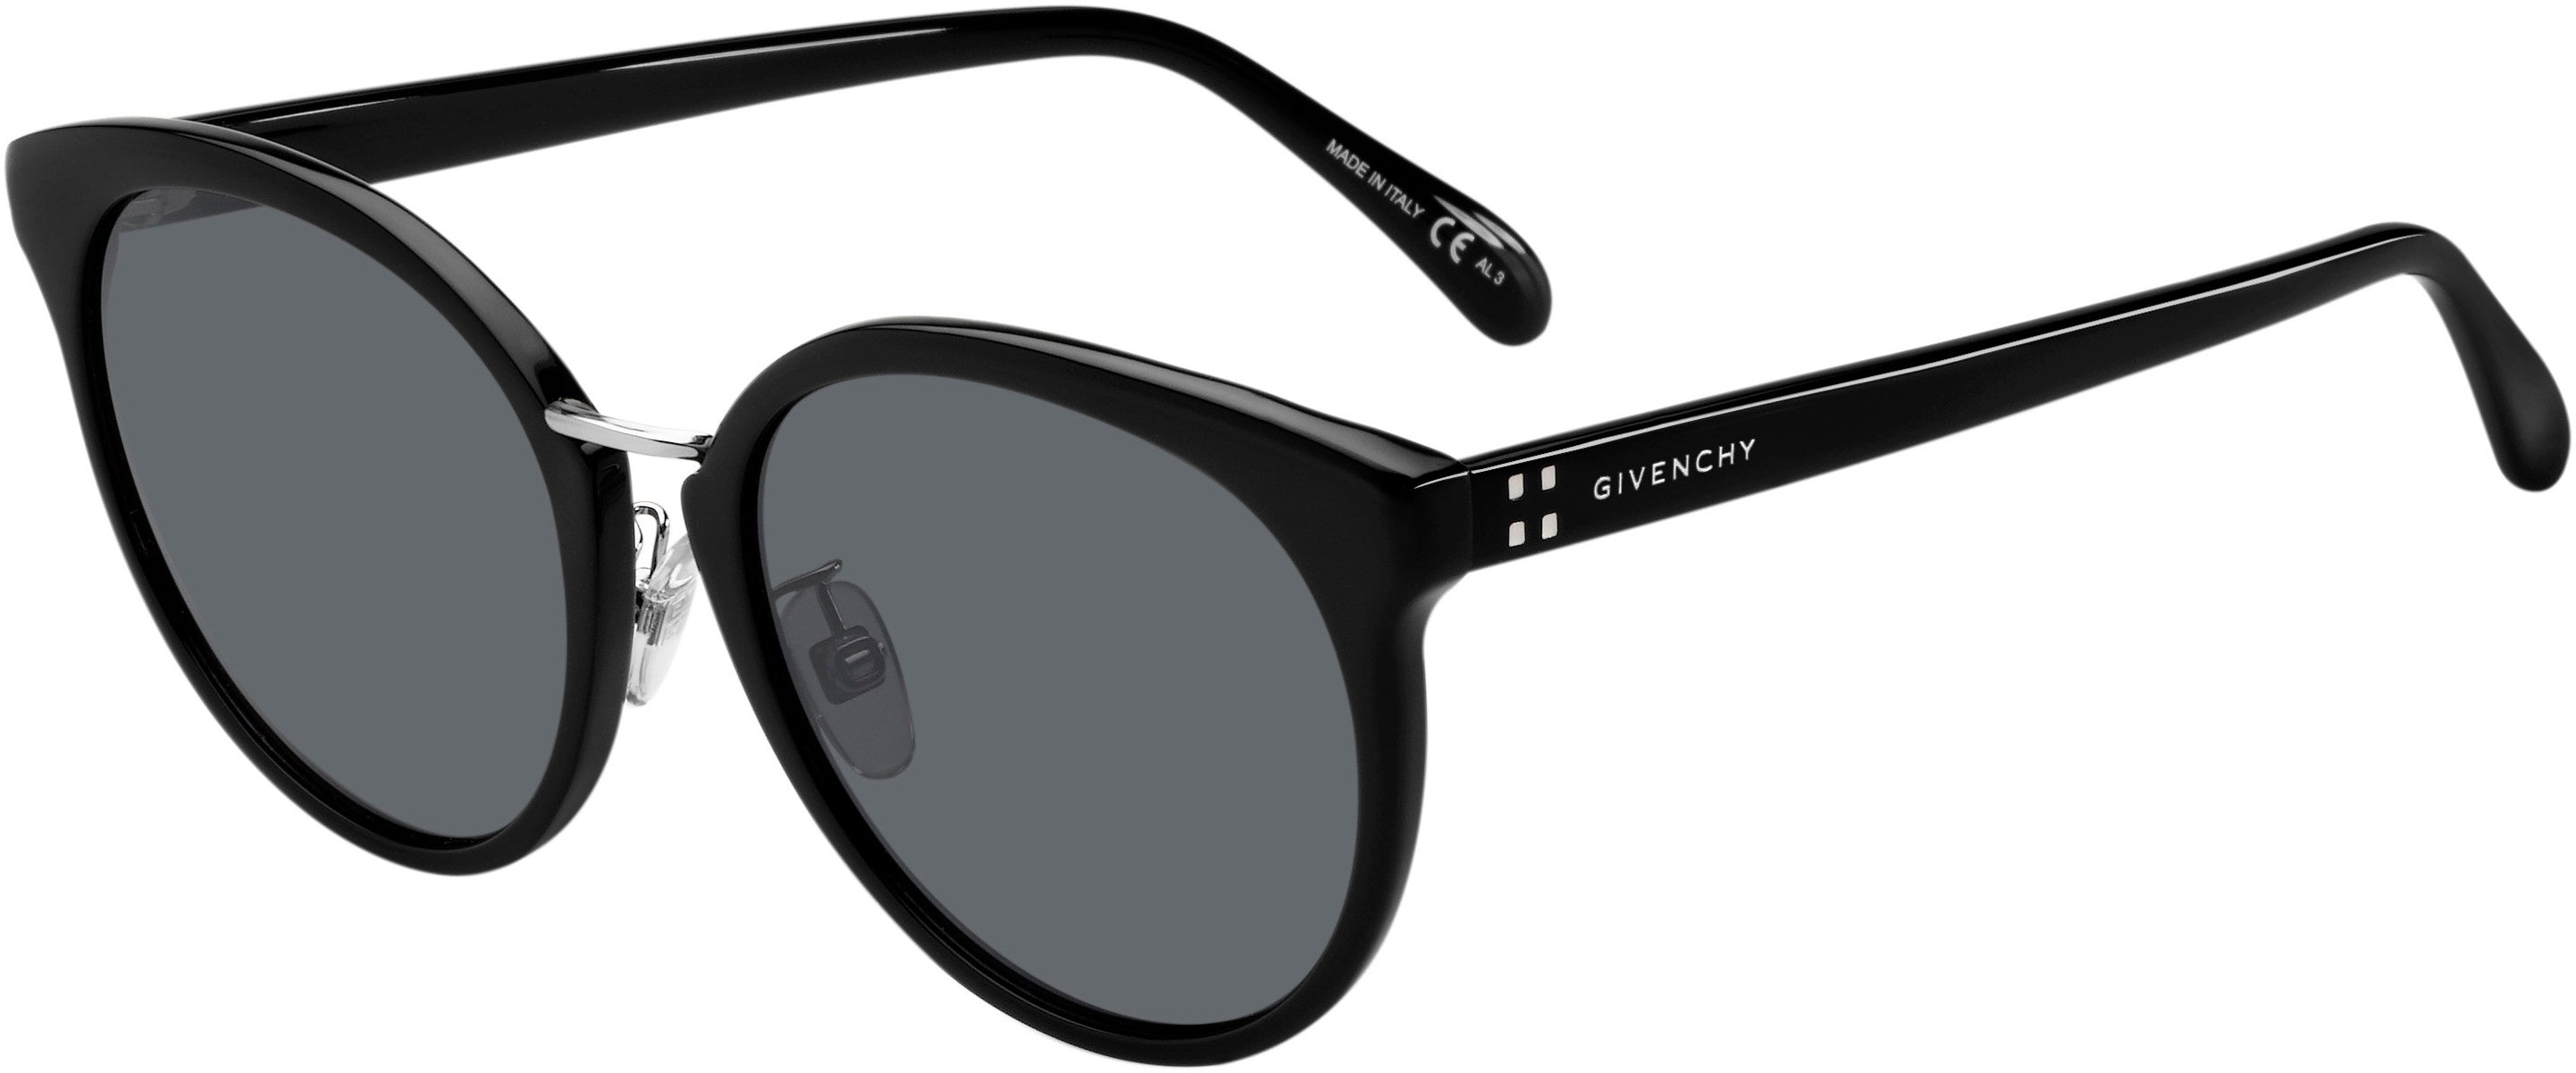  Givenchy 7115/F/S Oval Modified Sunglasses 0807-0807  Black (IR Gray)